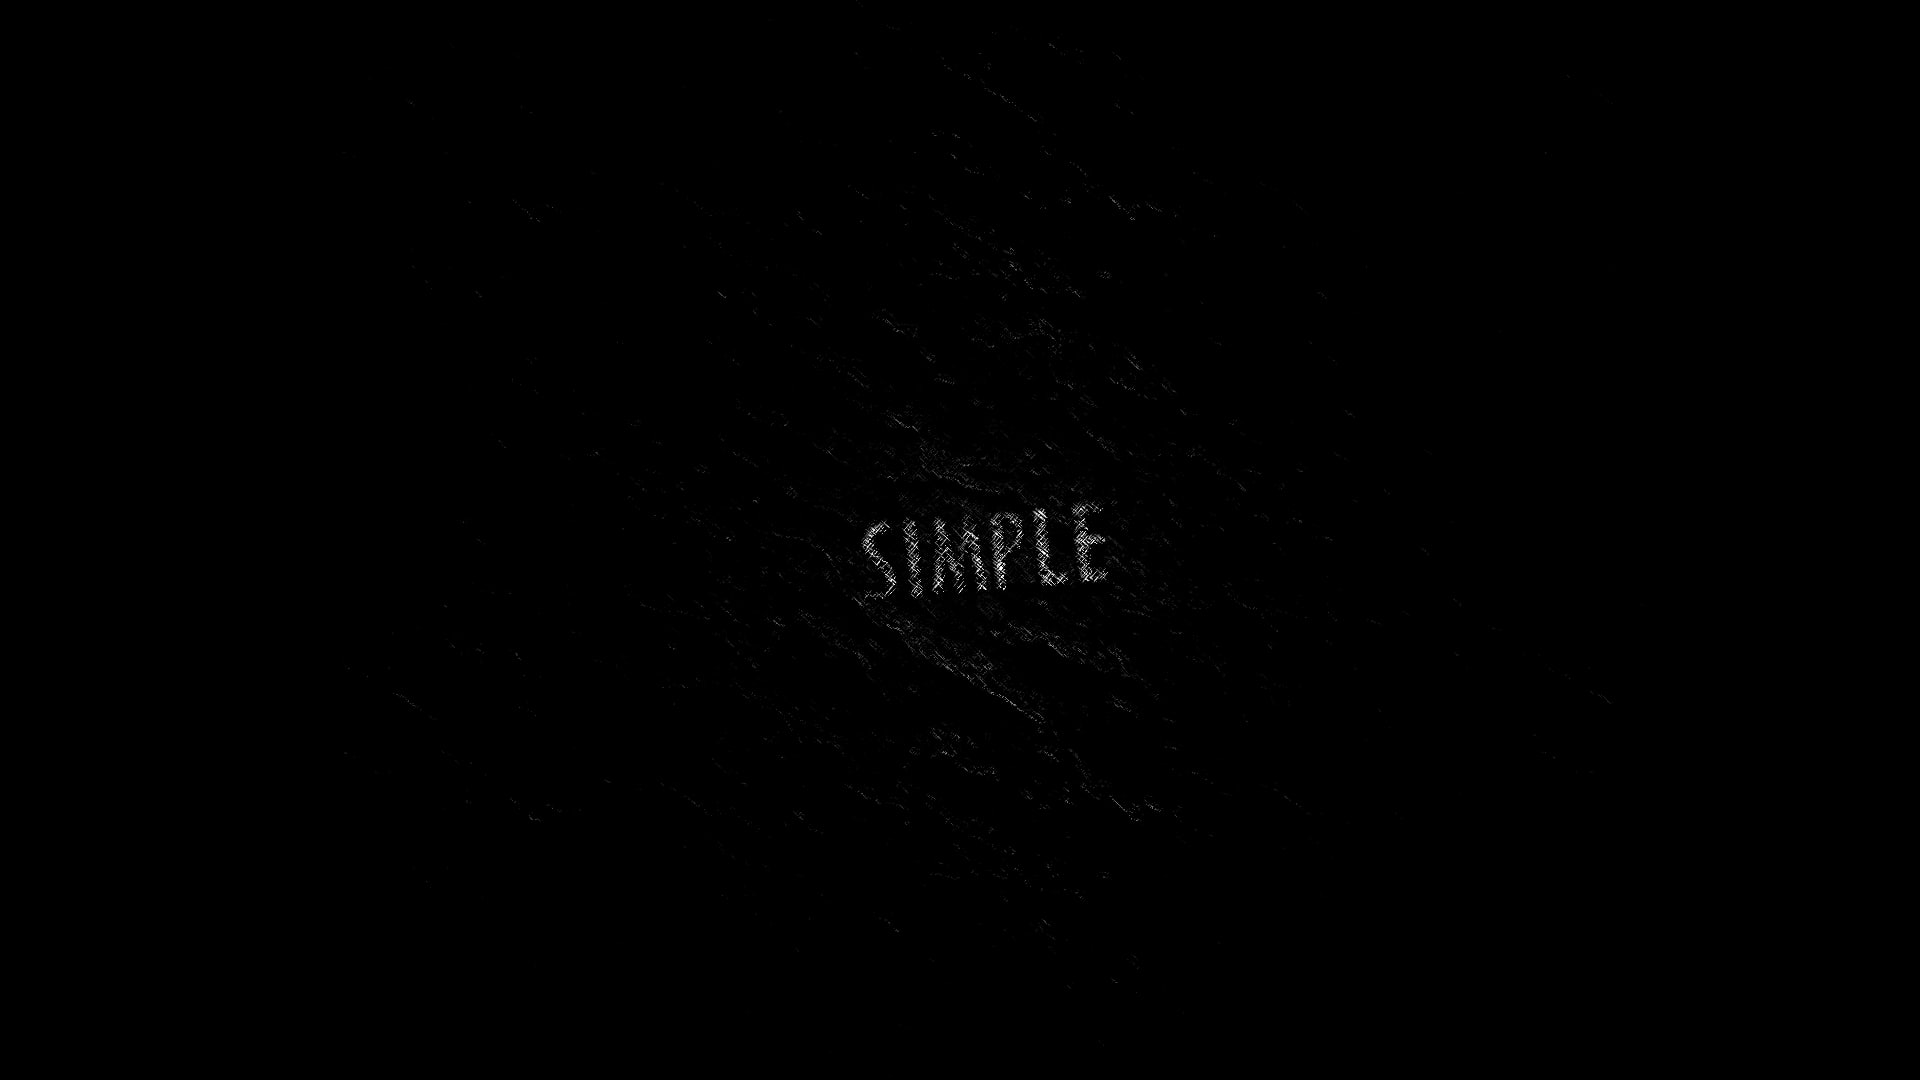 simple, dark, typography, minimalism